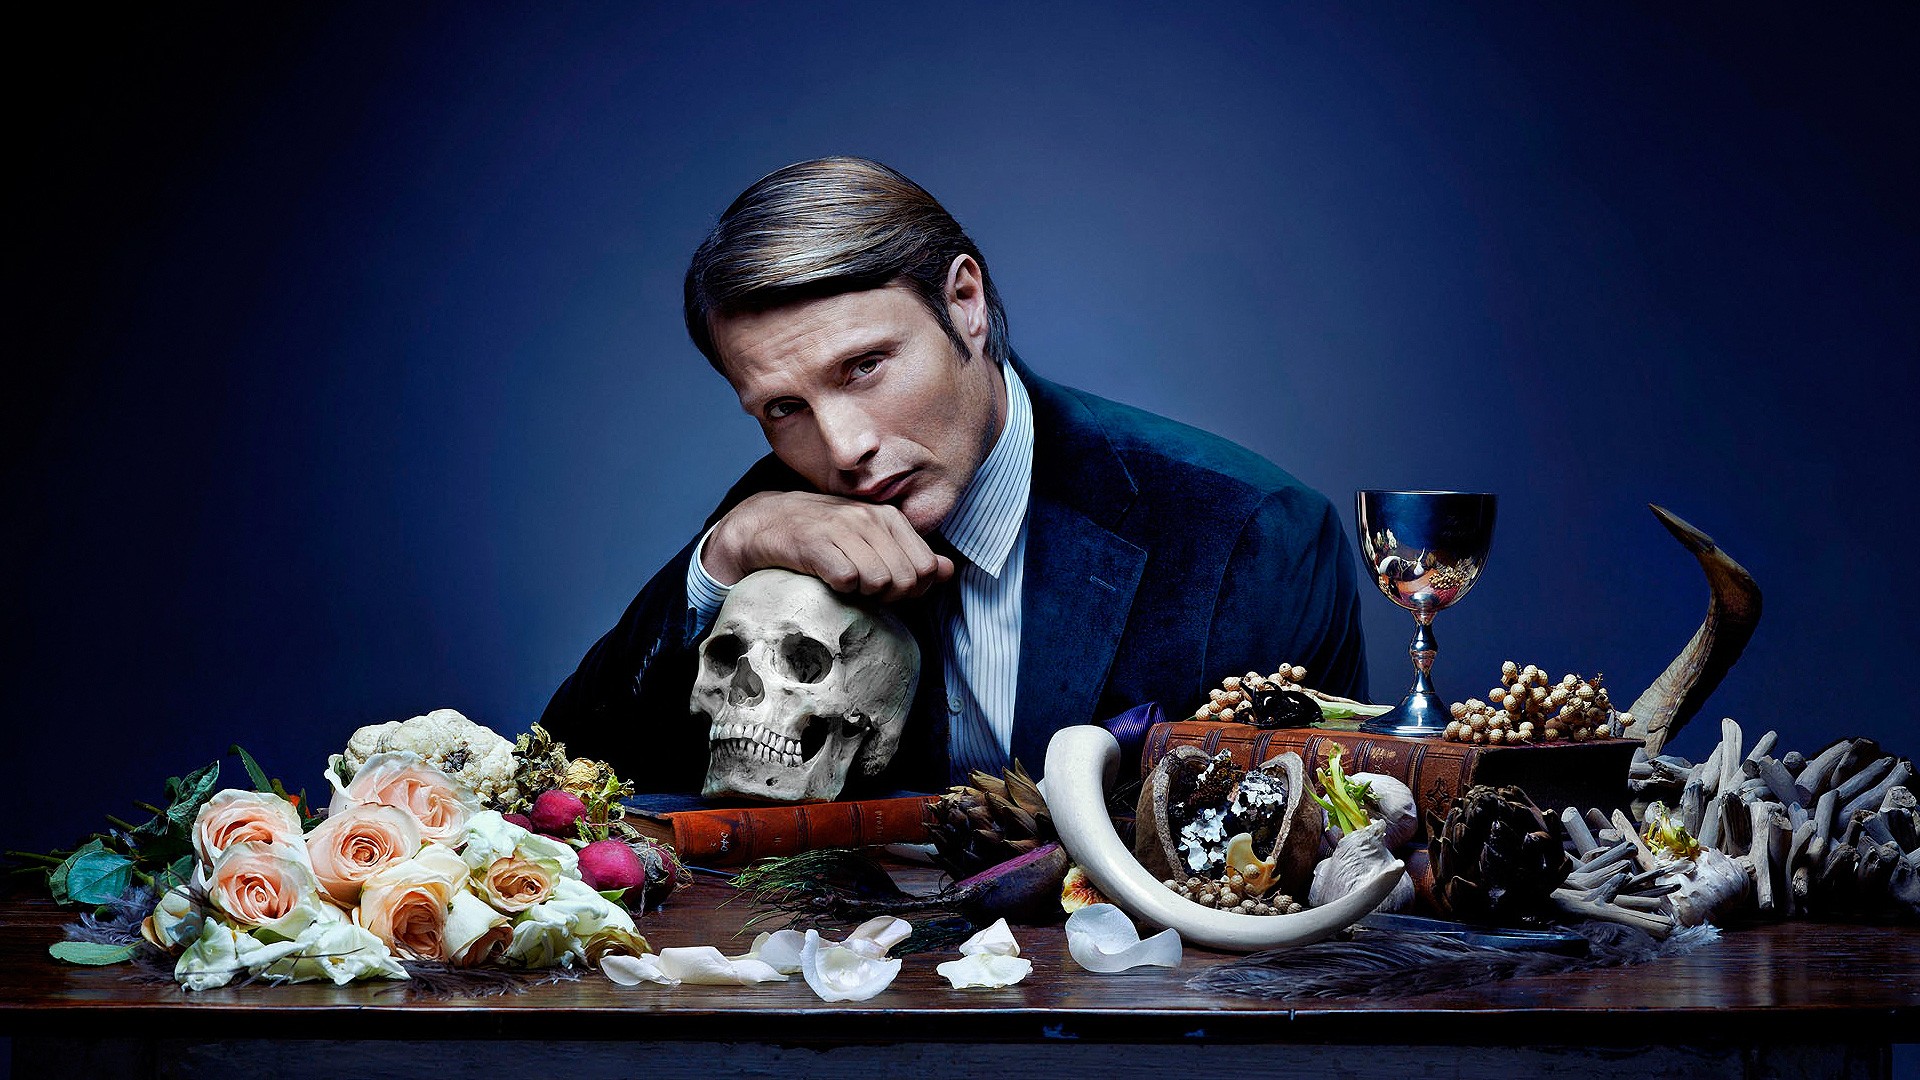 TV Show Hannibal HD Wallpaper | Background Image